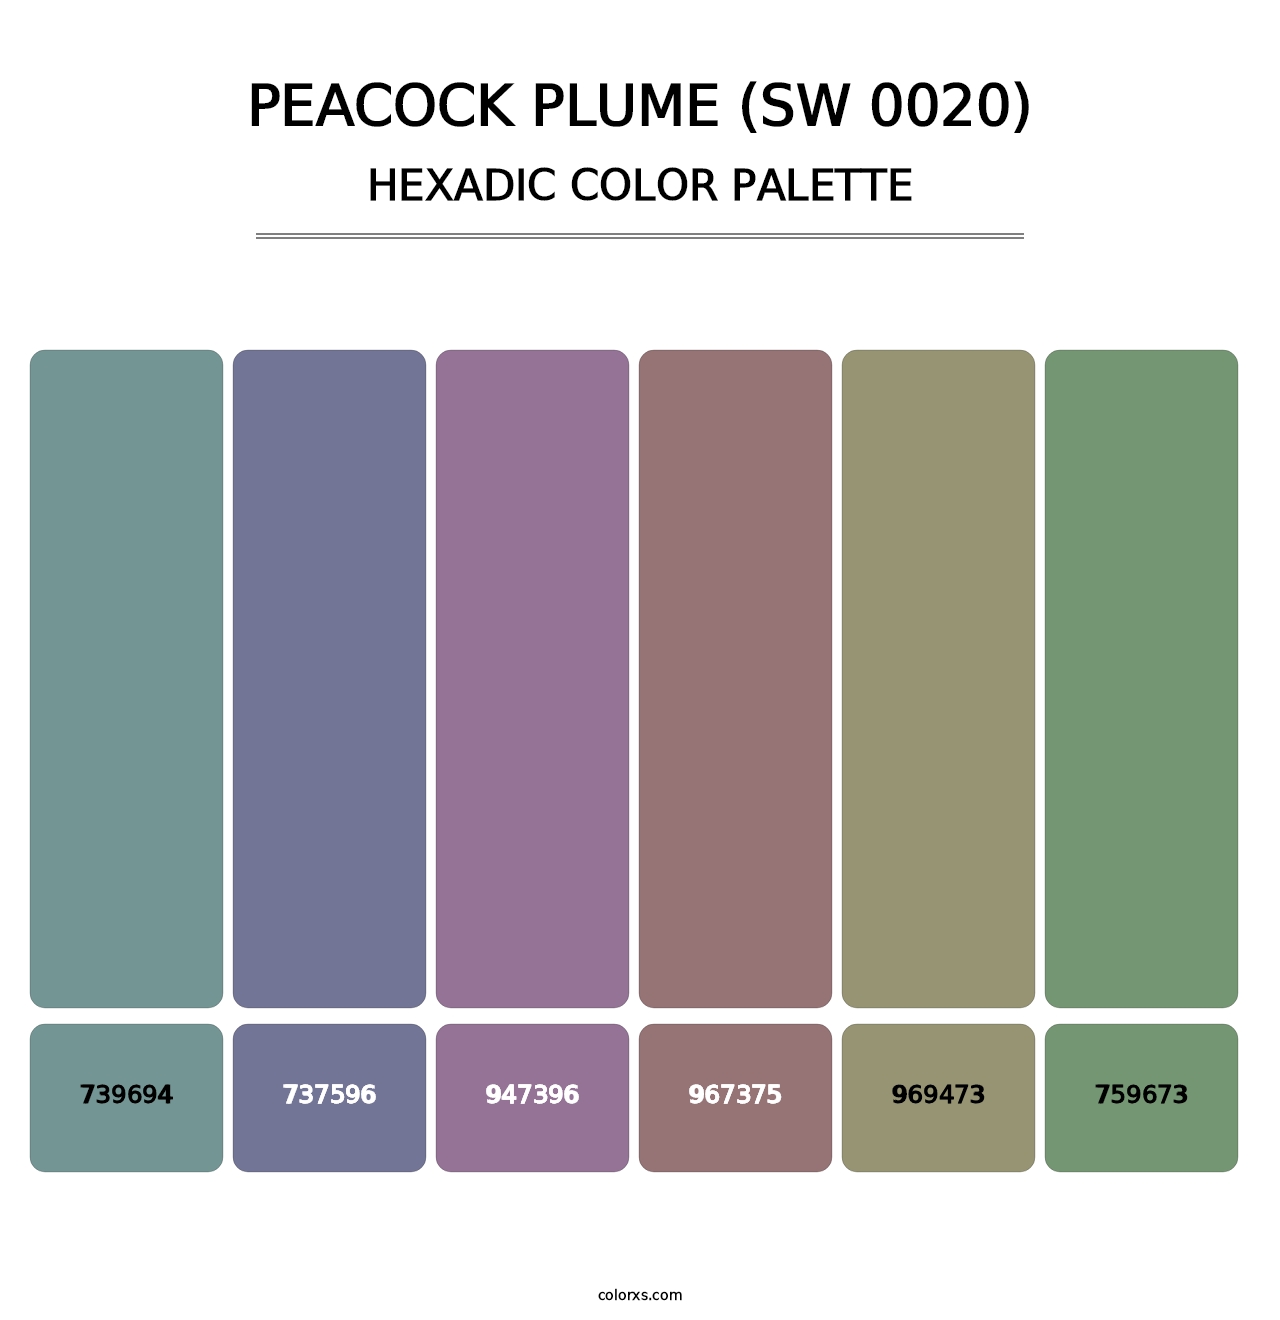 Peacock Plume (SW 0020) - Hexadic Color Palette